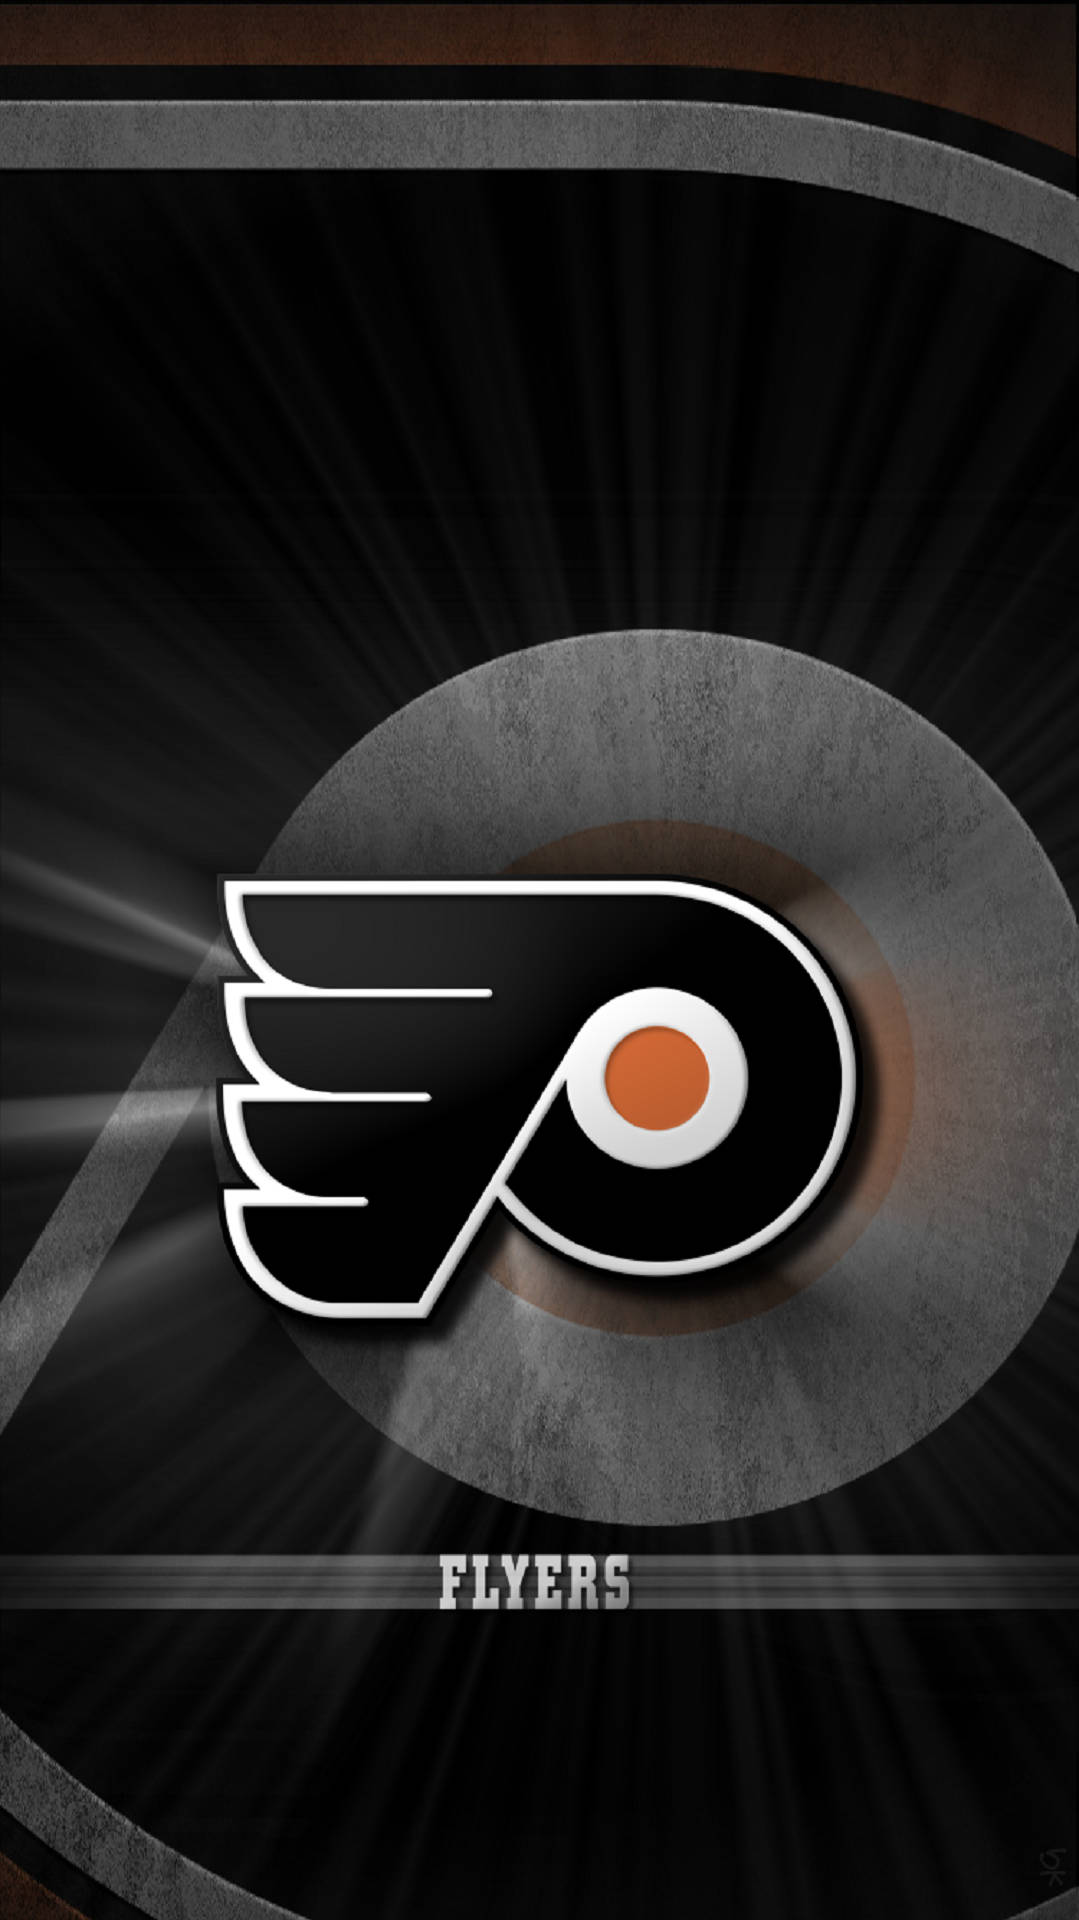 Philadelphia Flyers Ice Hockey Team Wallpaper